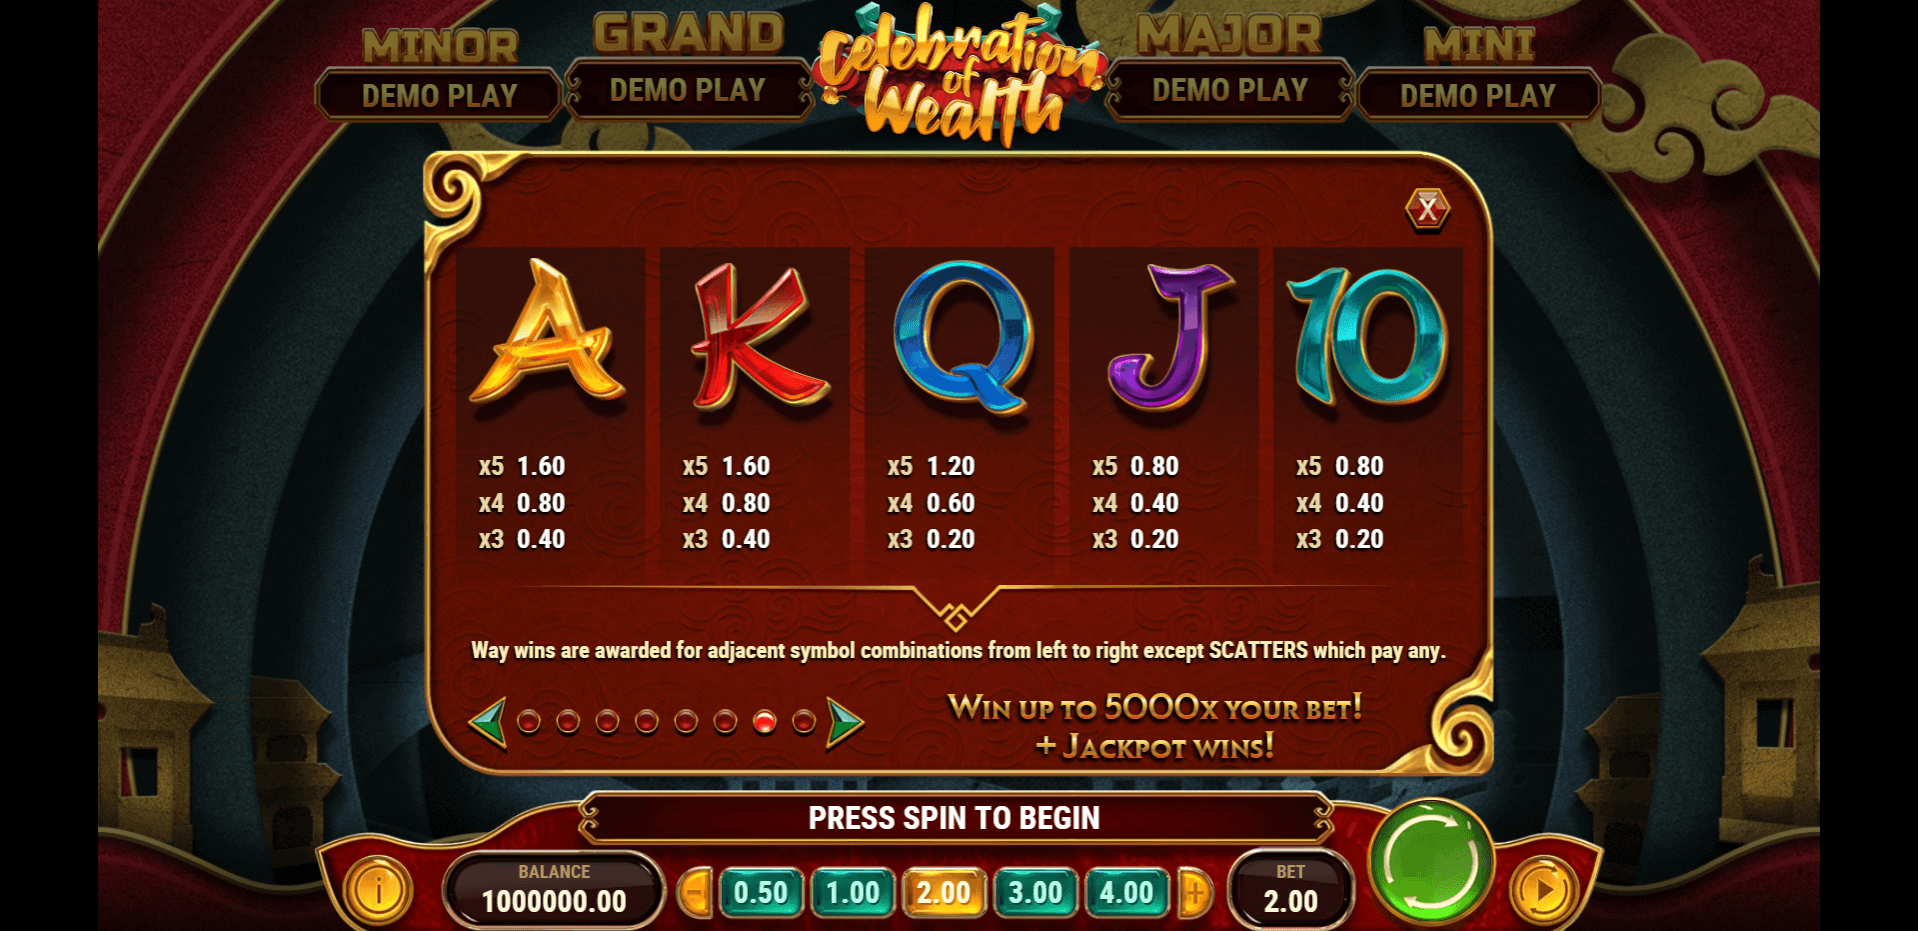 celebration of wealth slot machine detail image 6